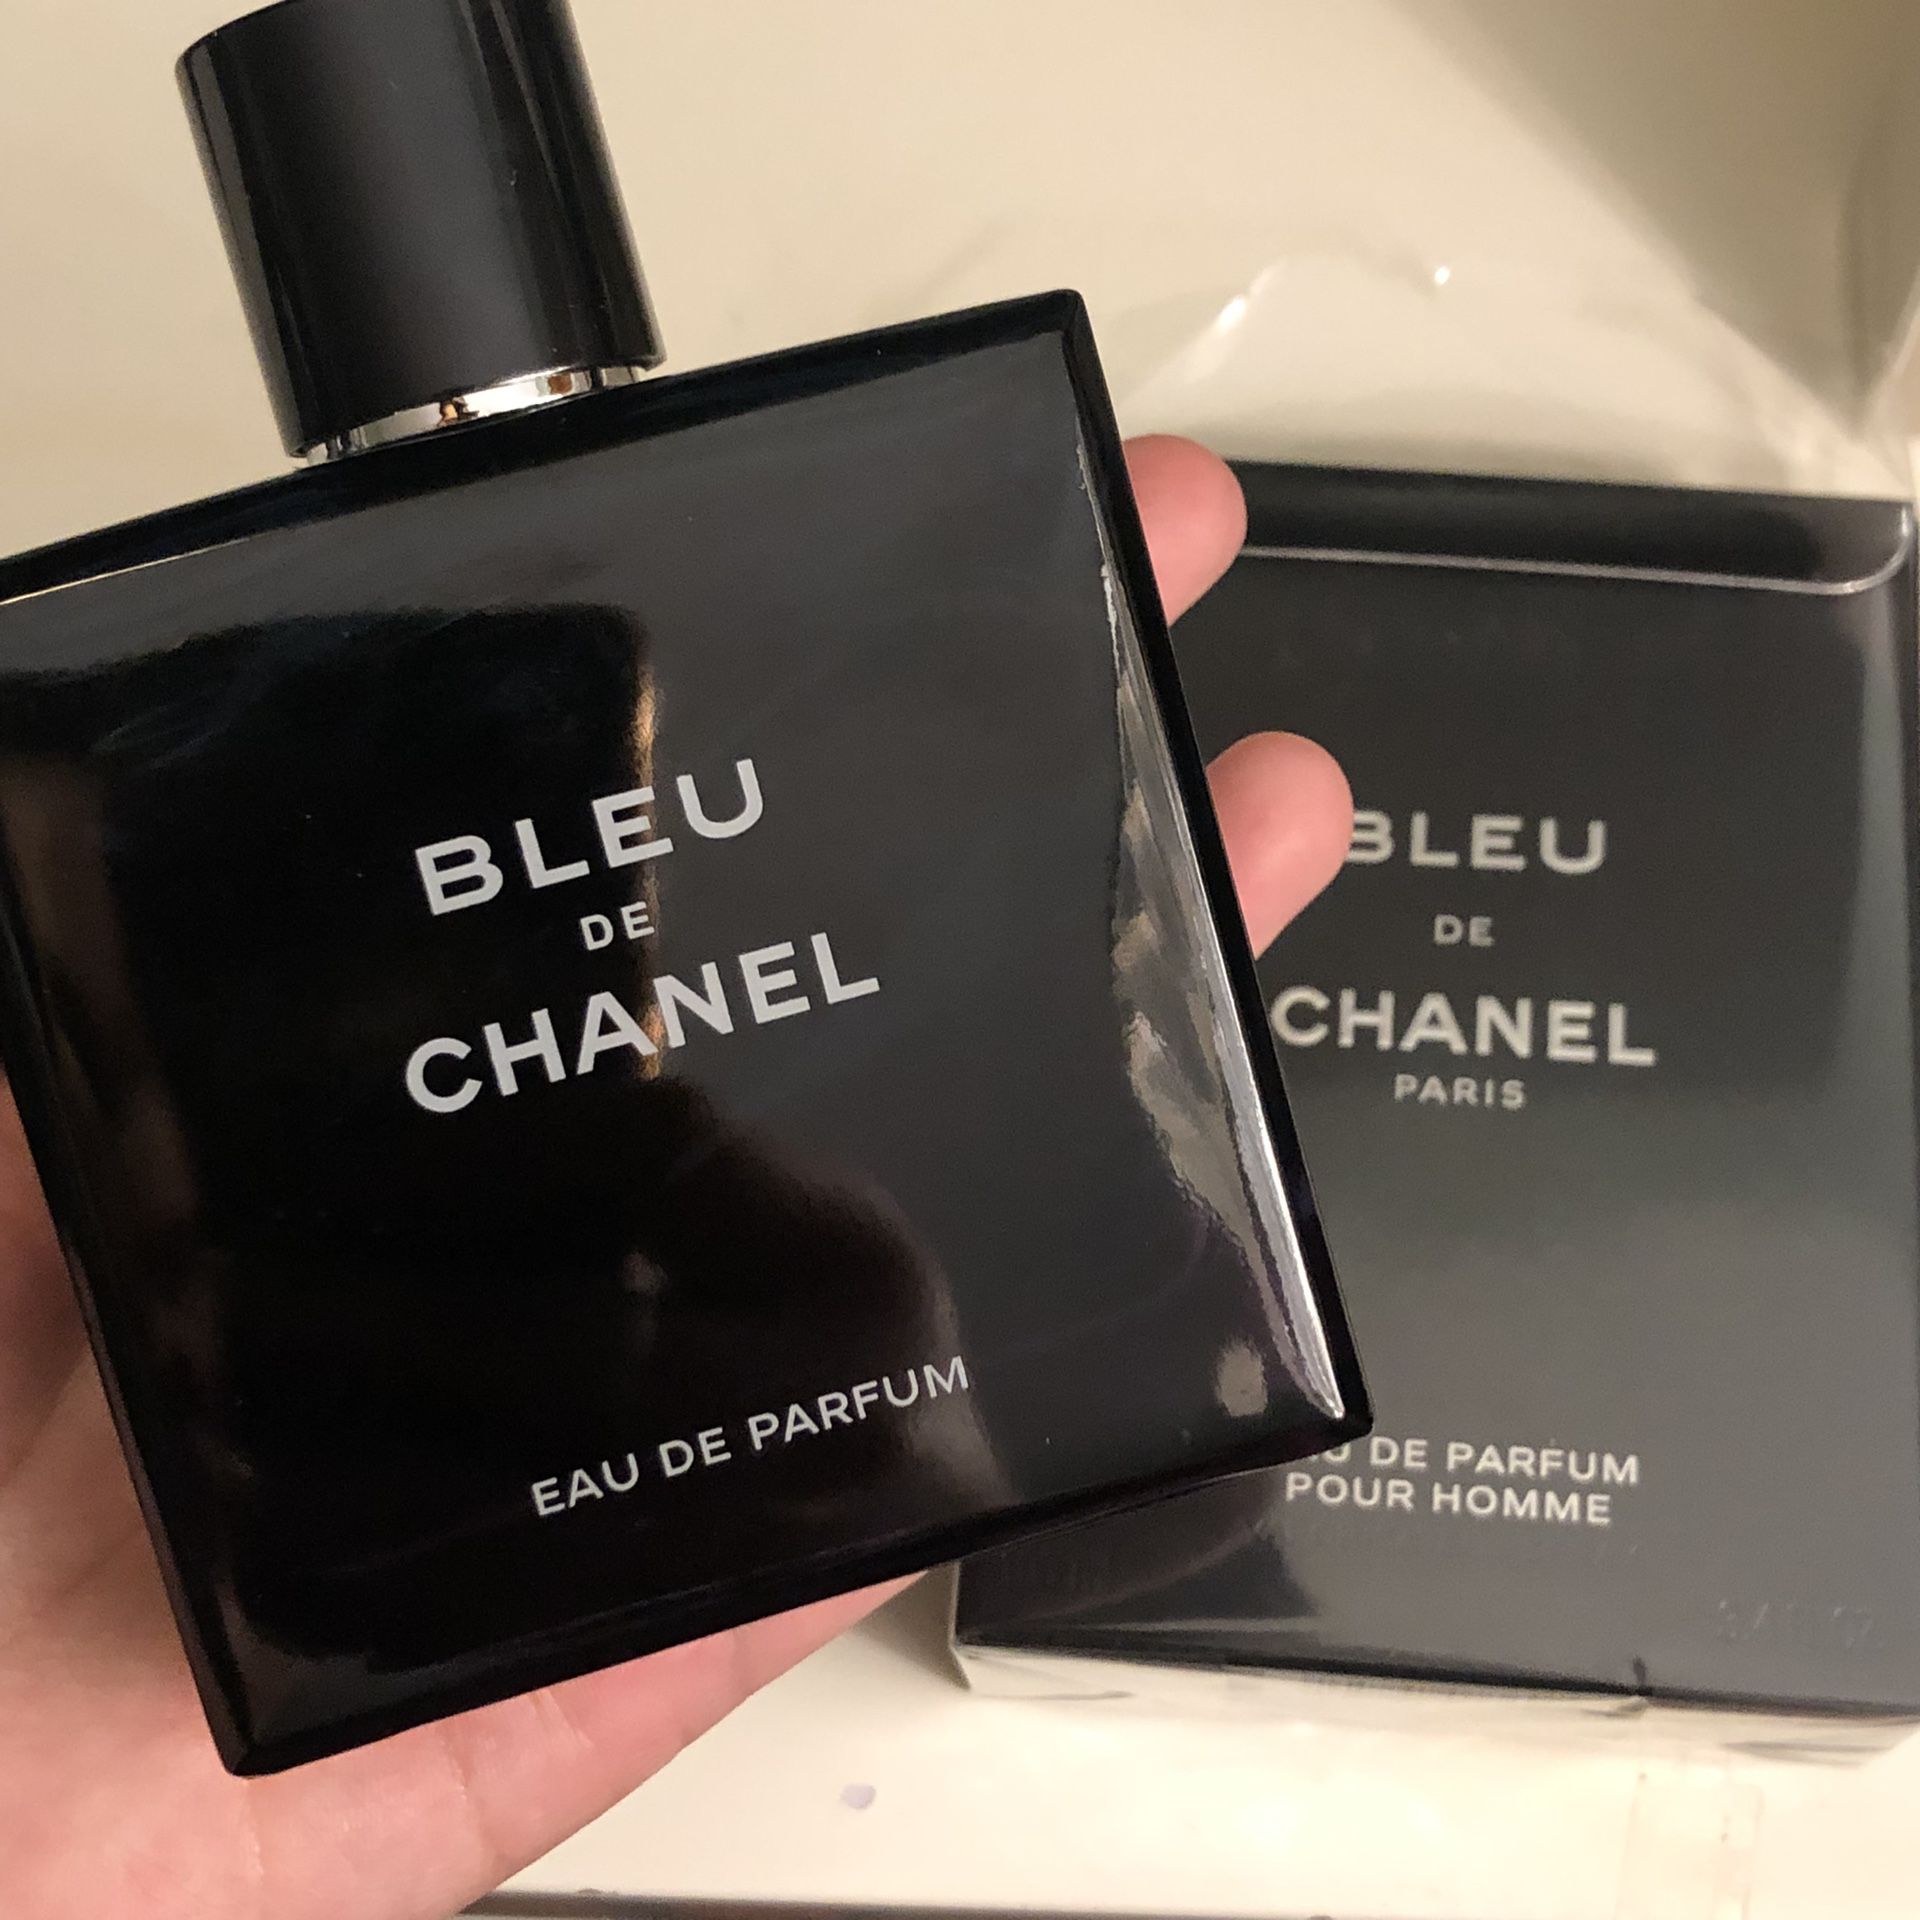 Bleu de Chanel Mens cologne for Sale in Lebanon, MO - OfferUp